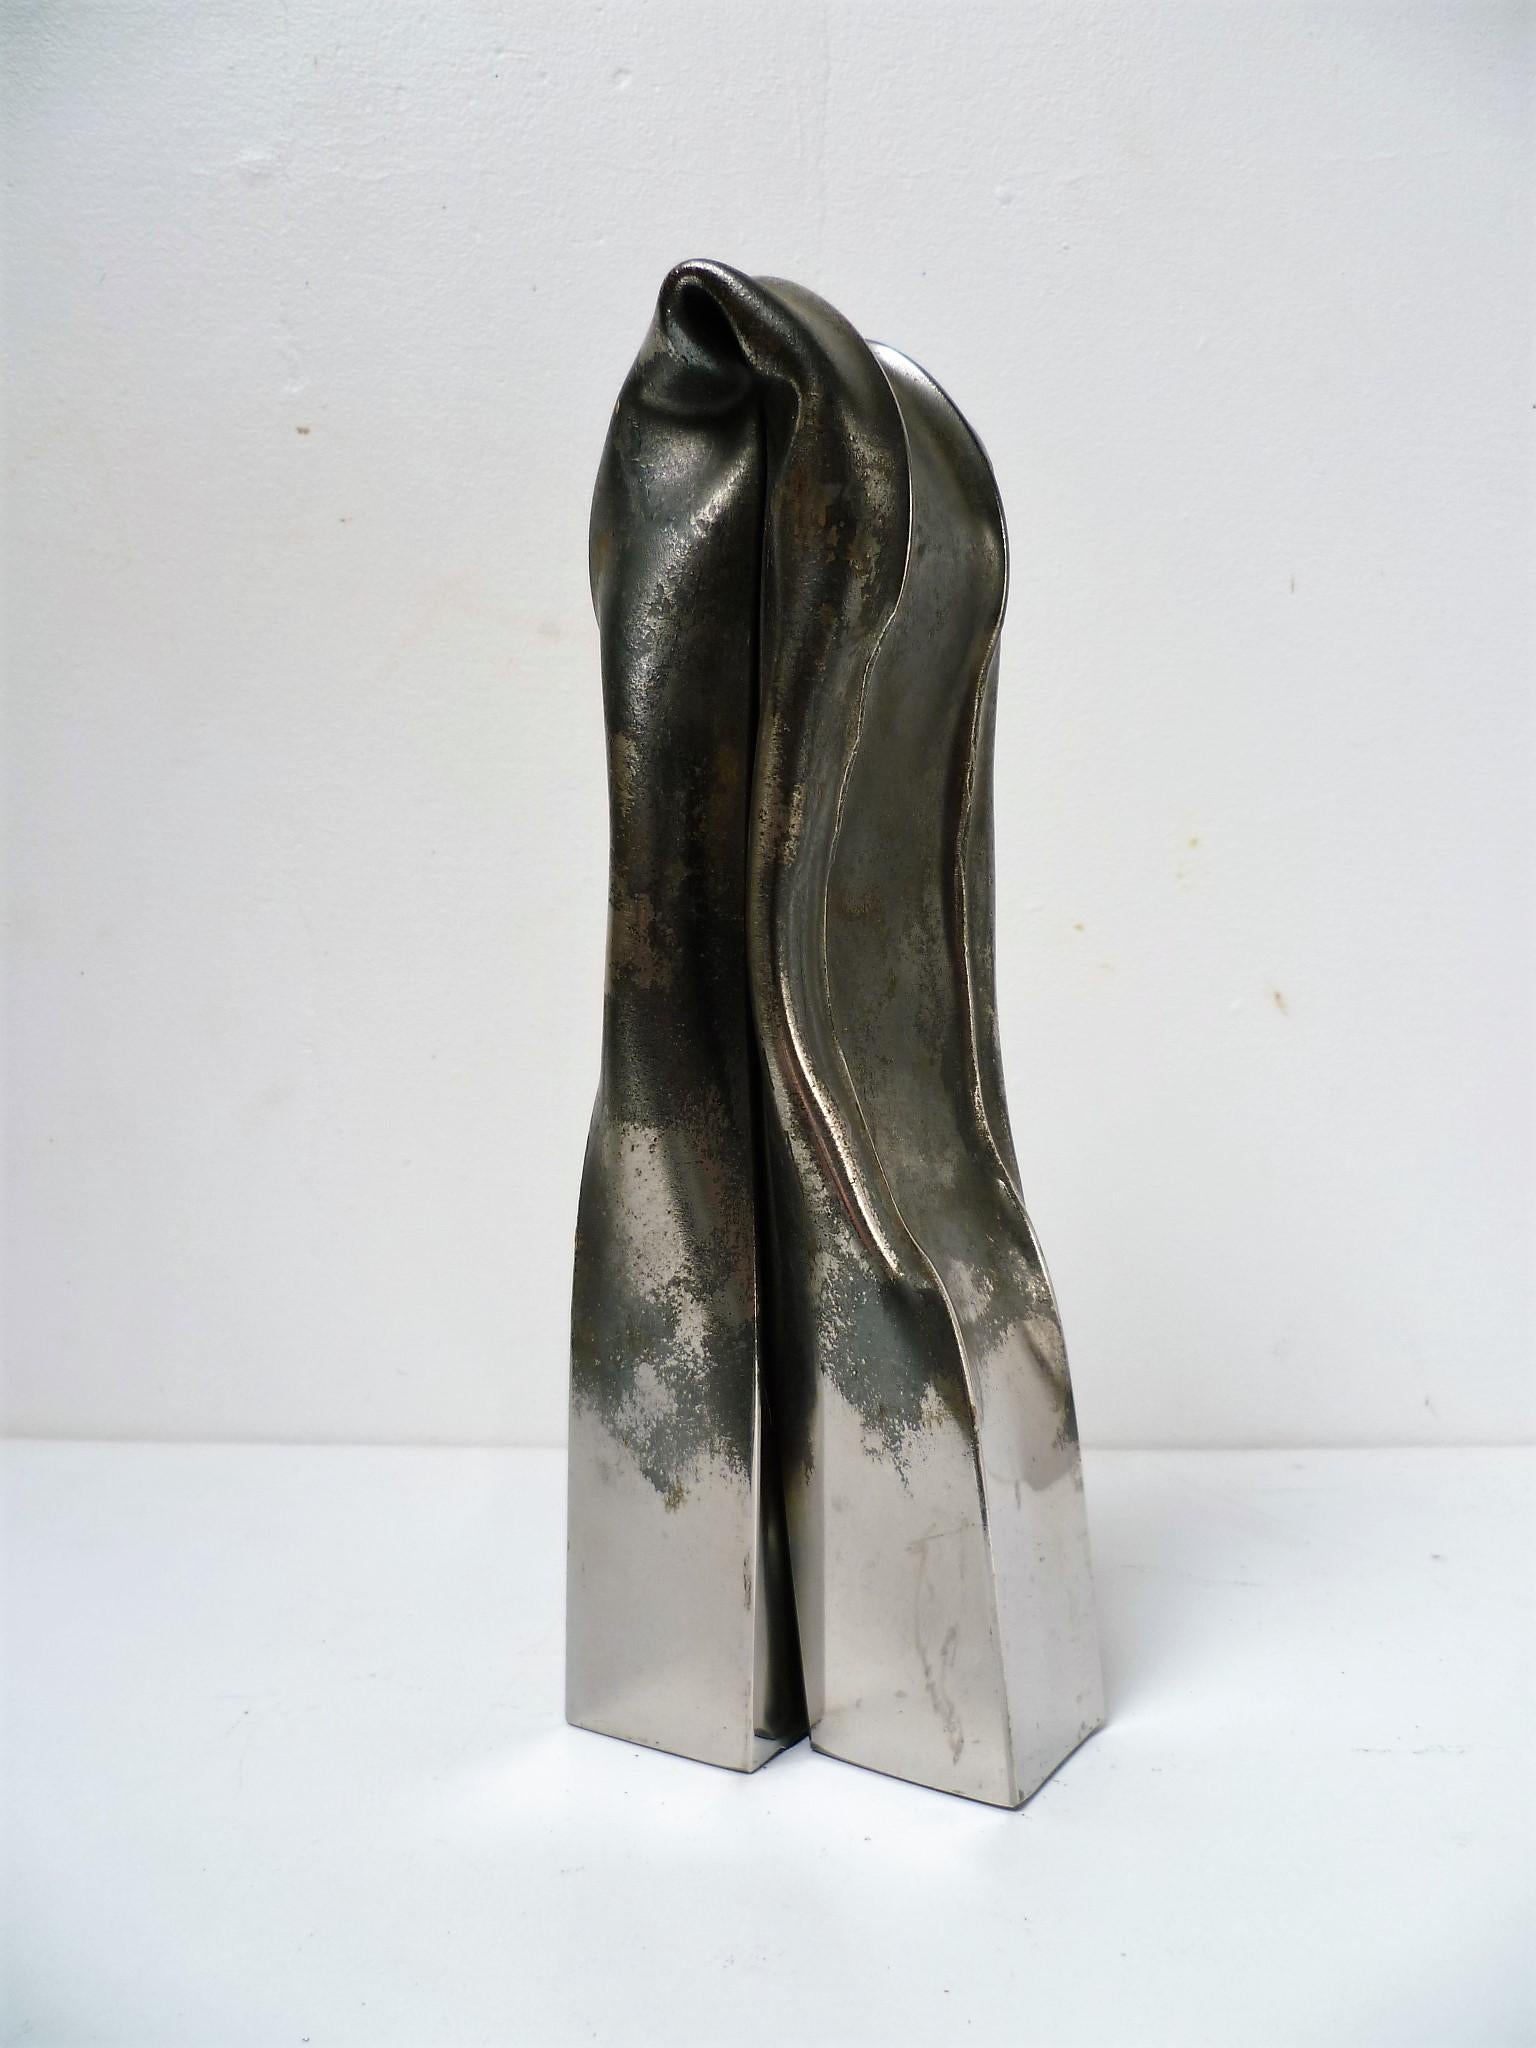 Figurative Sculpture Frédérick Mazoir  - Art contemporain français par Frdrick Mazoir - Magmatisme 06